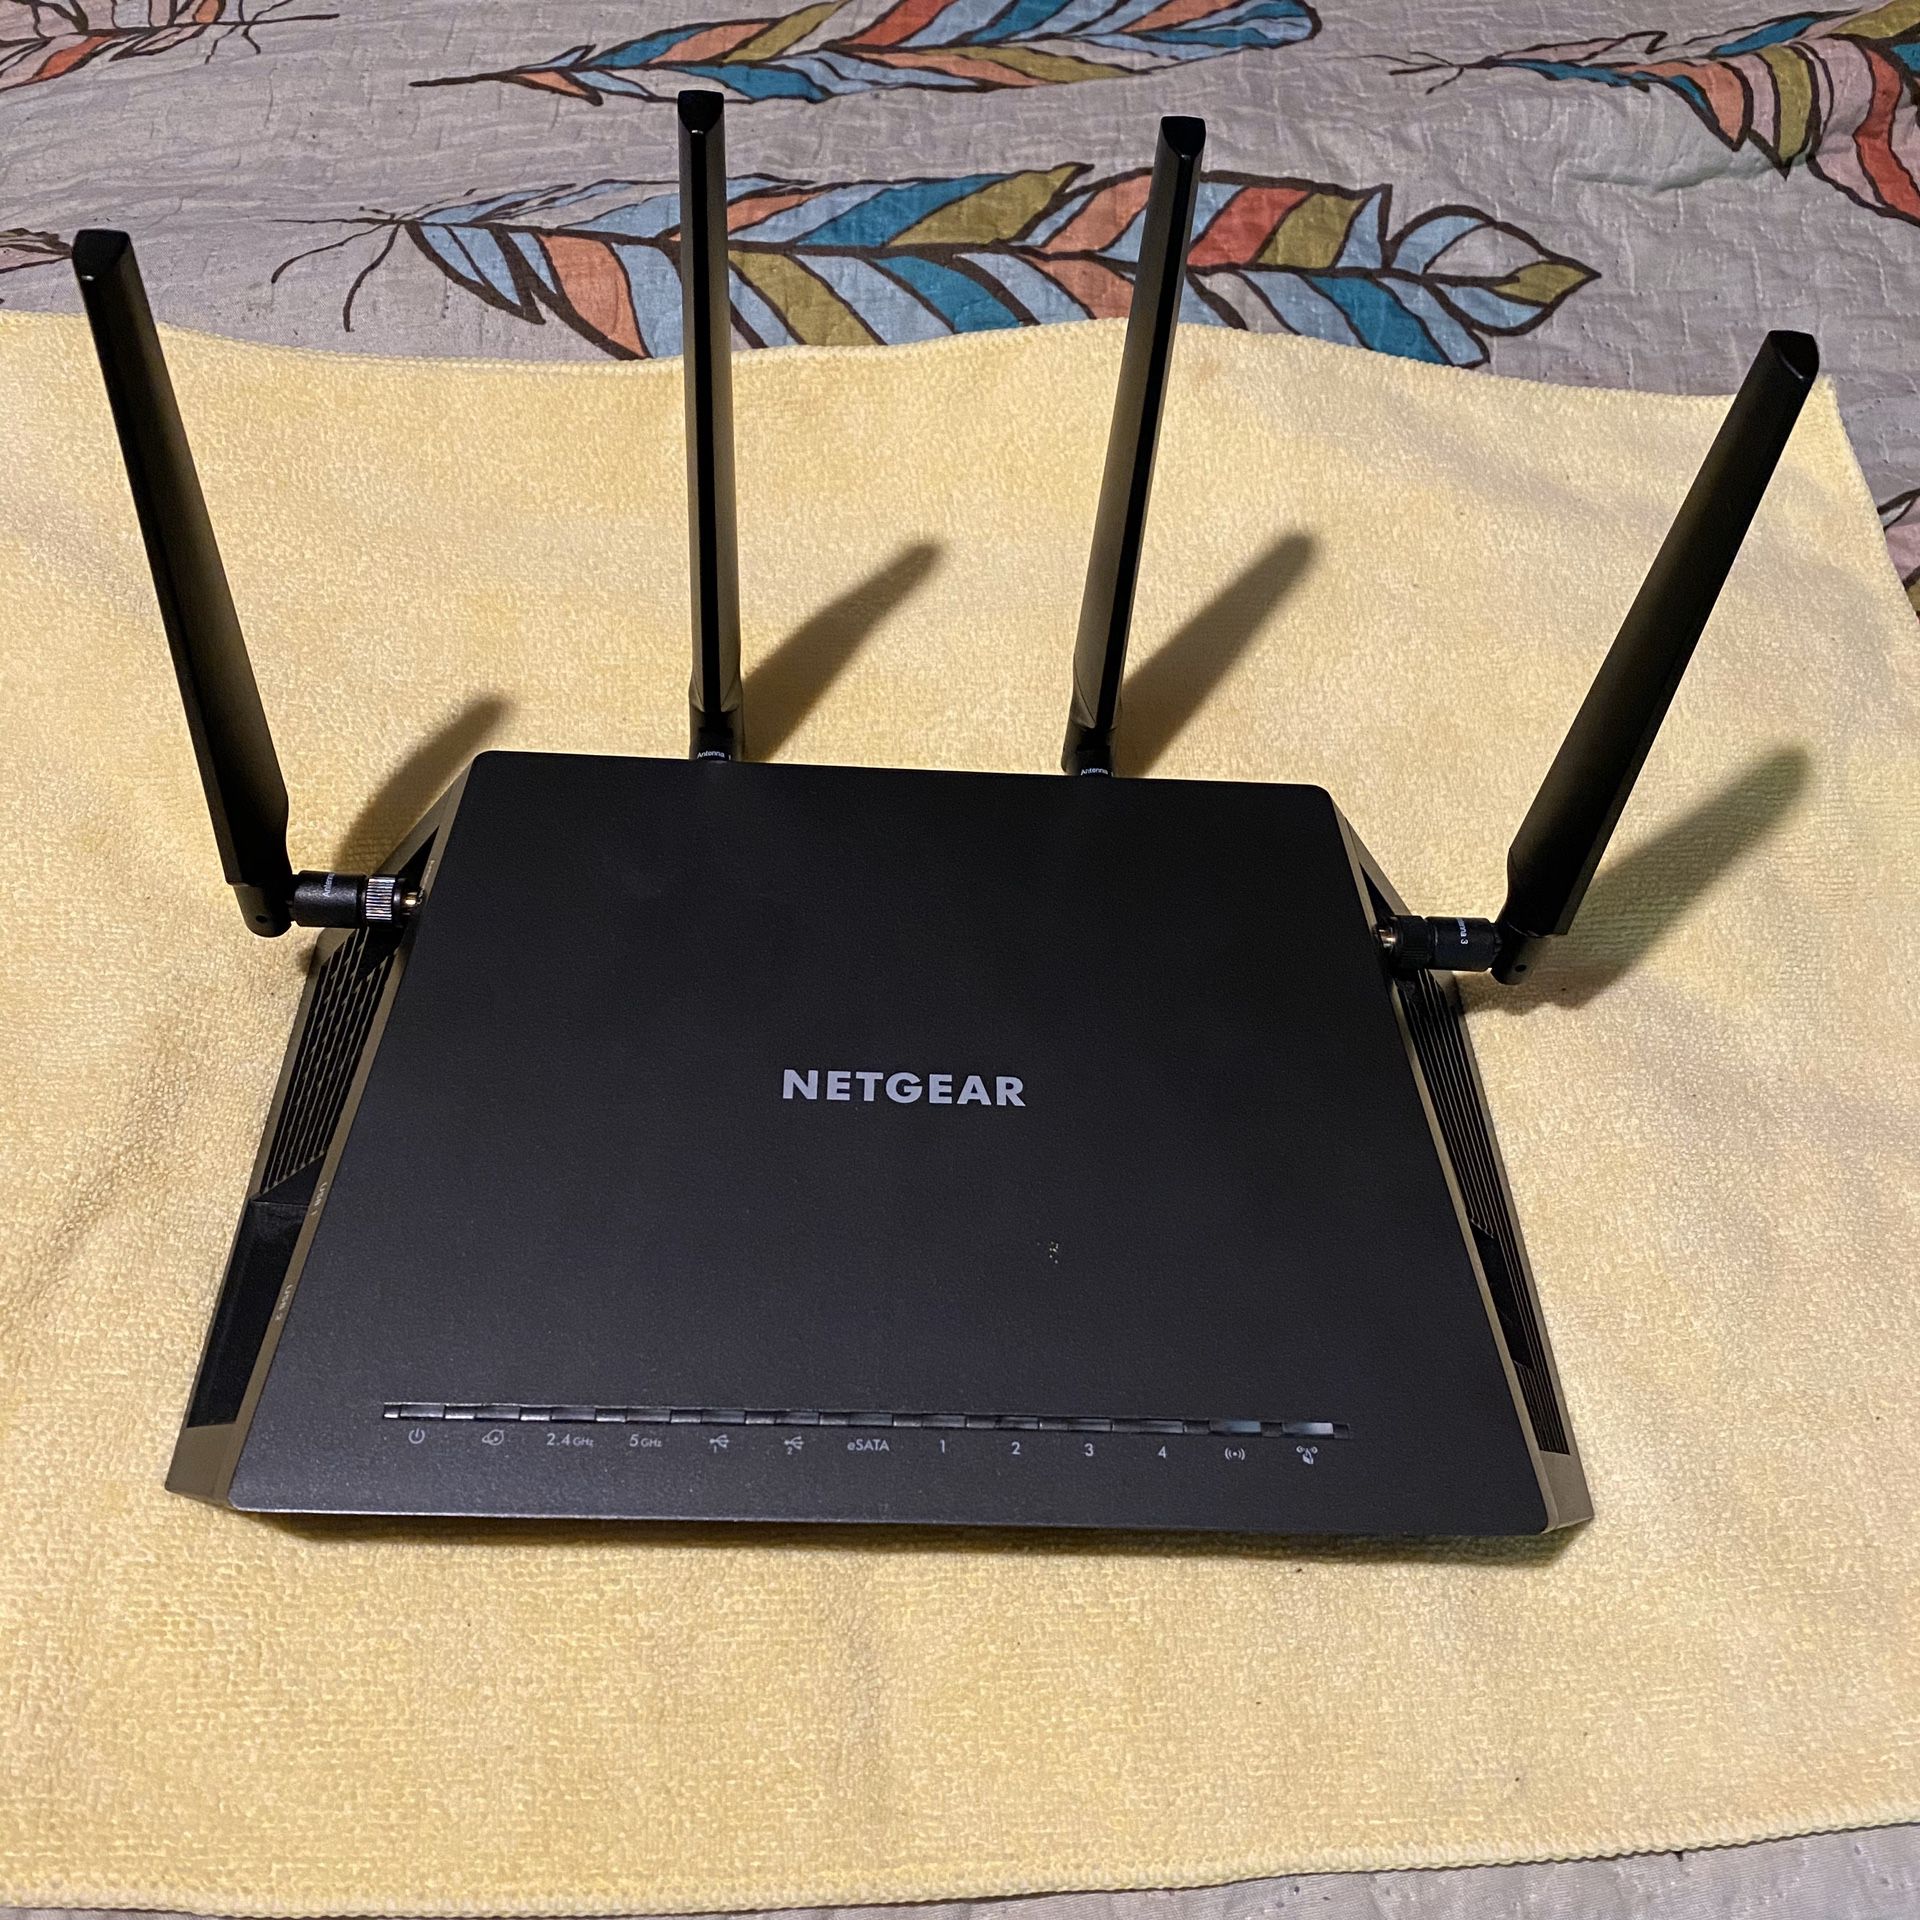 NETGEAR Nighthawk X4S Smart WiFi Router (R7800) - AC2600